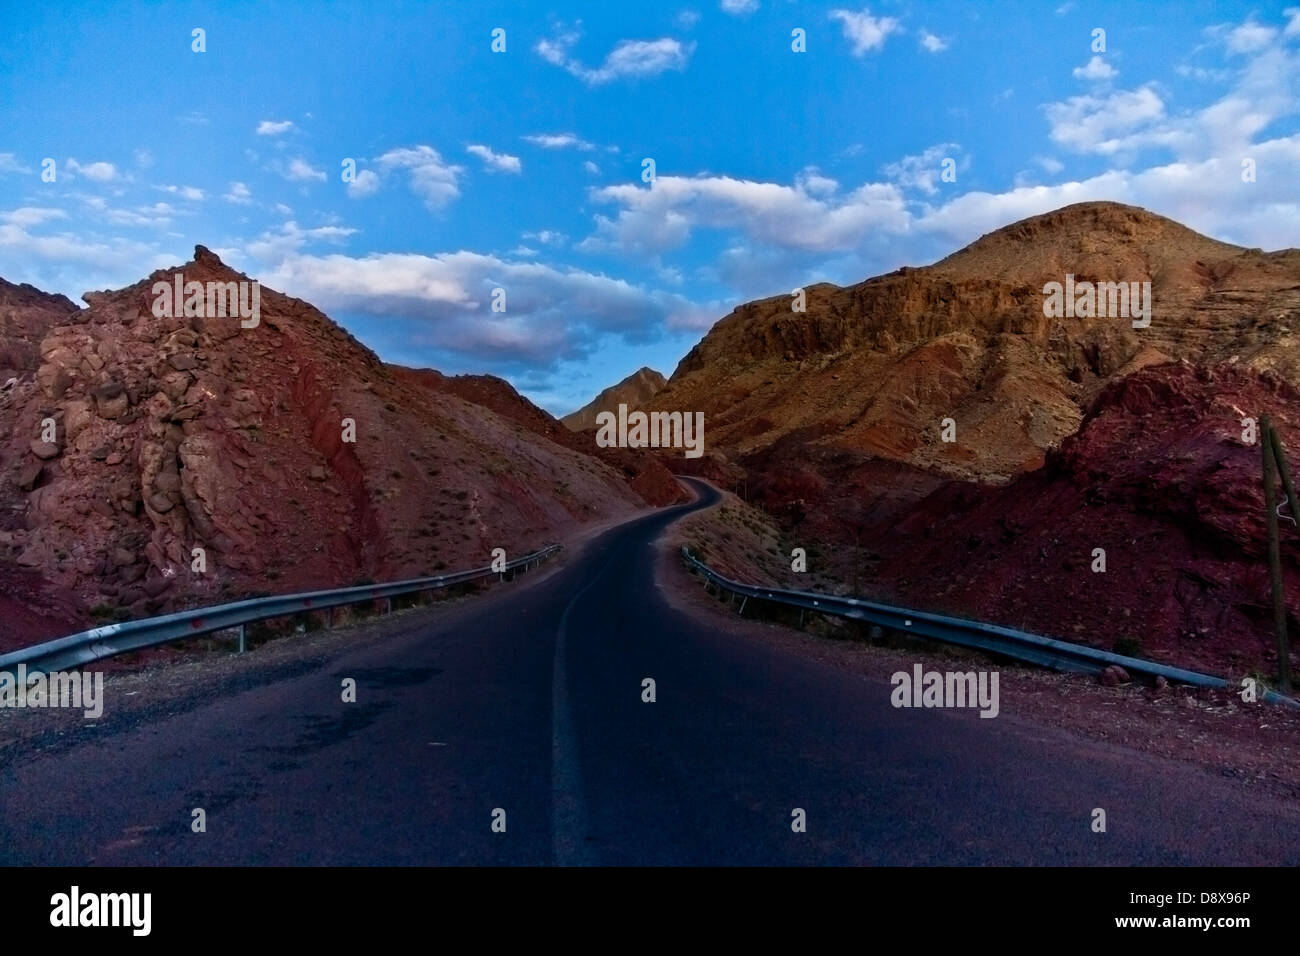 Winding mountain road near Dades gorge, Morocco Stock Photo